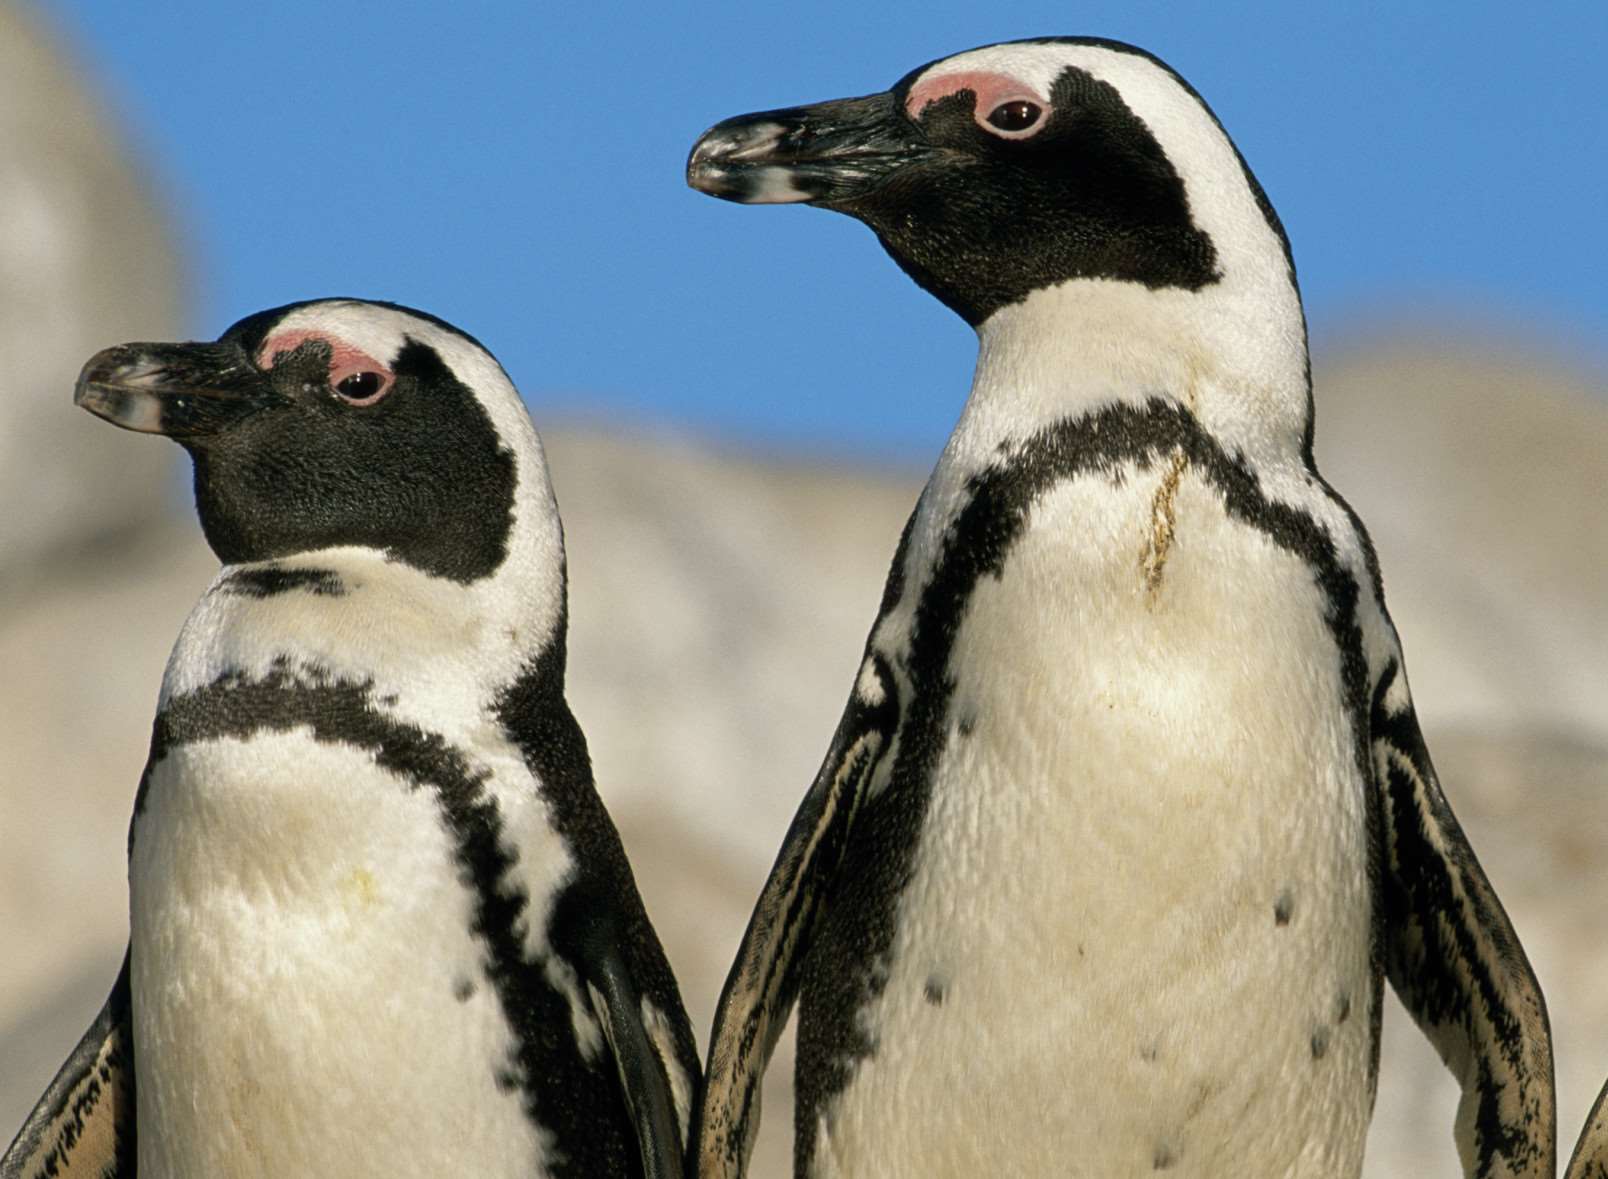 Meet the penguins at Nausicaa